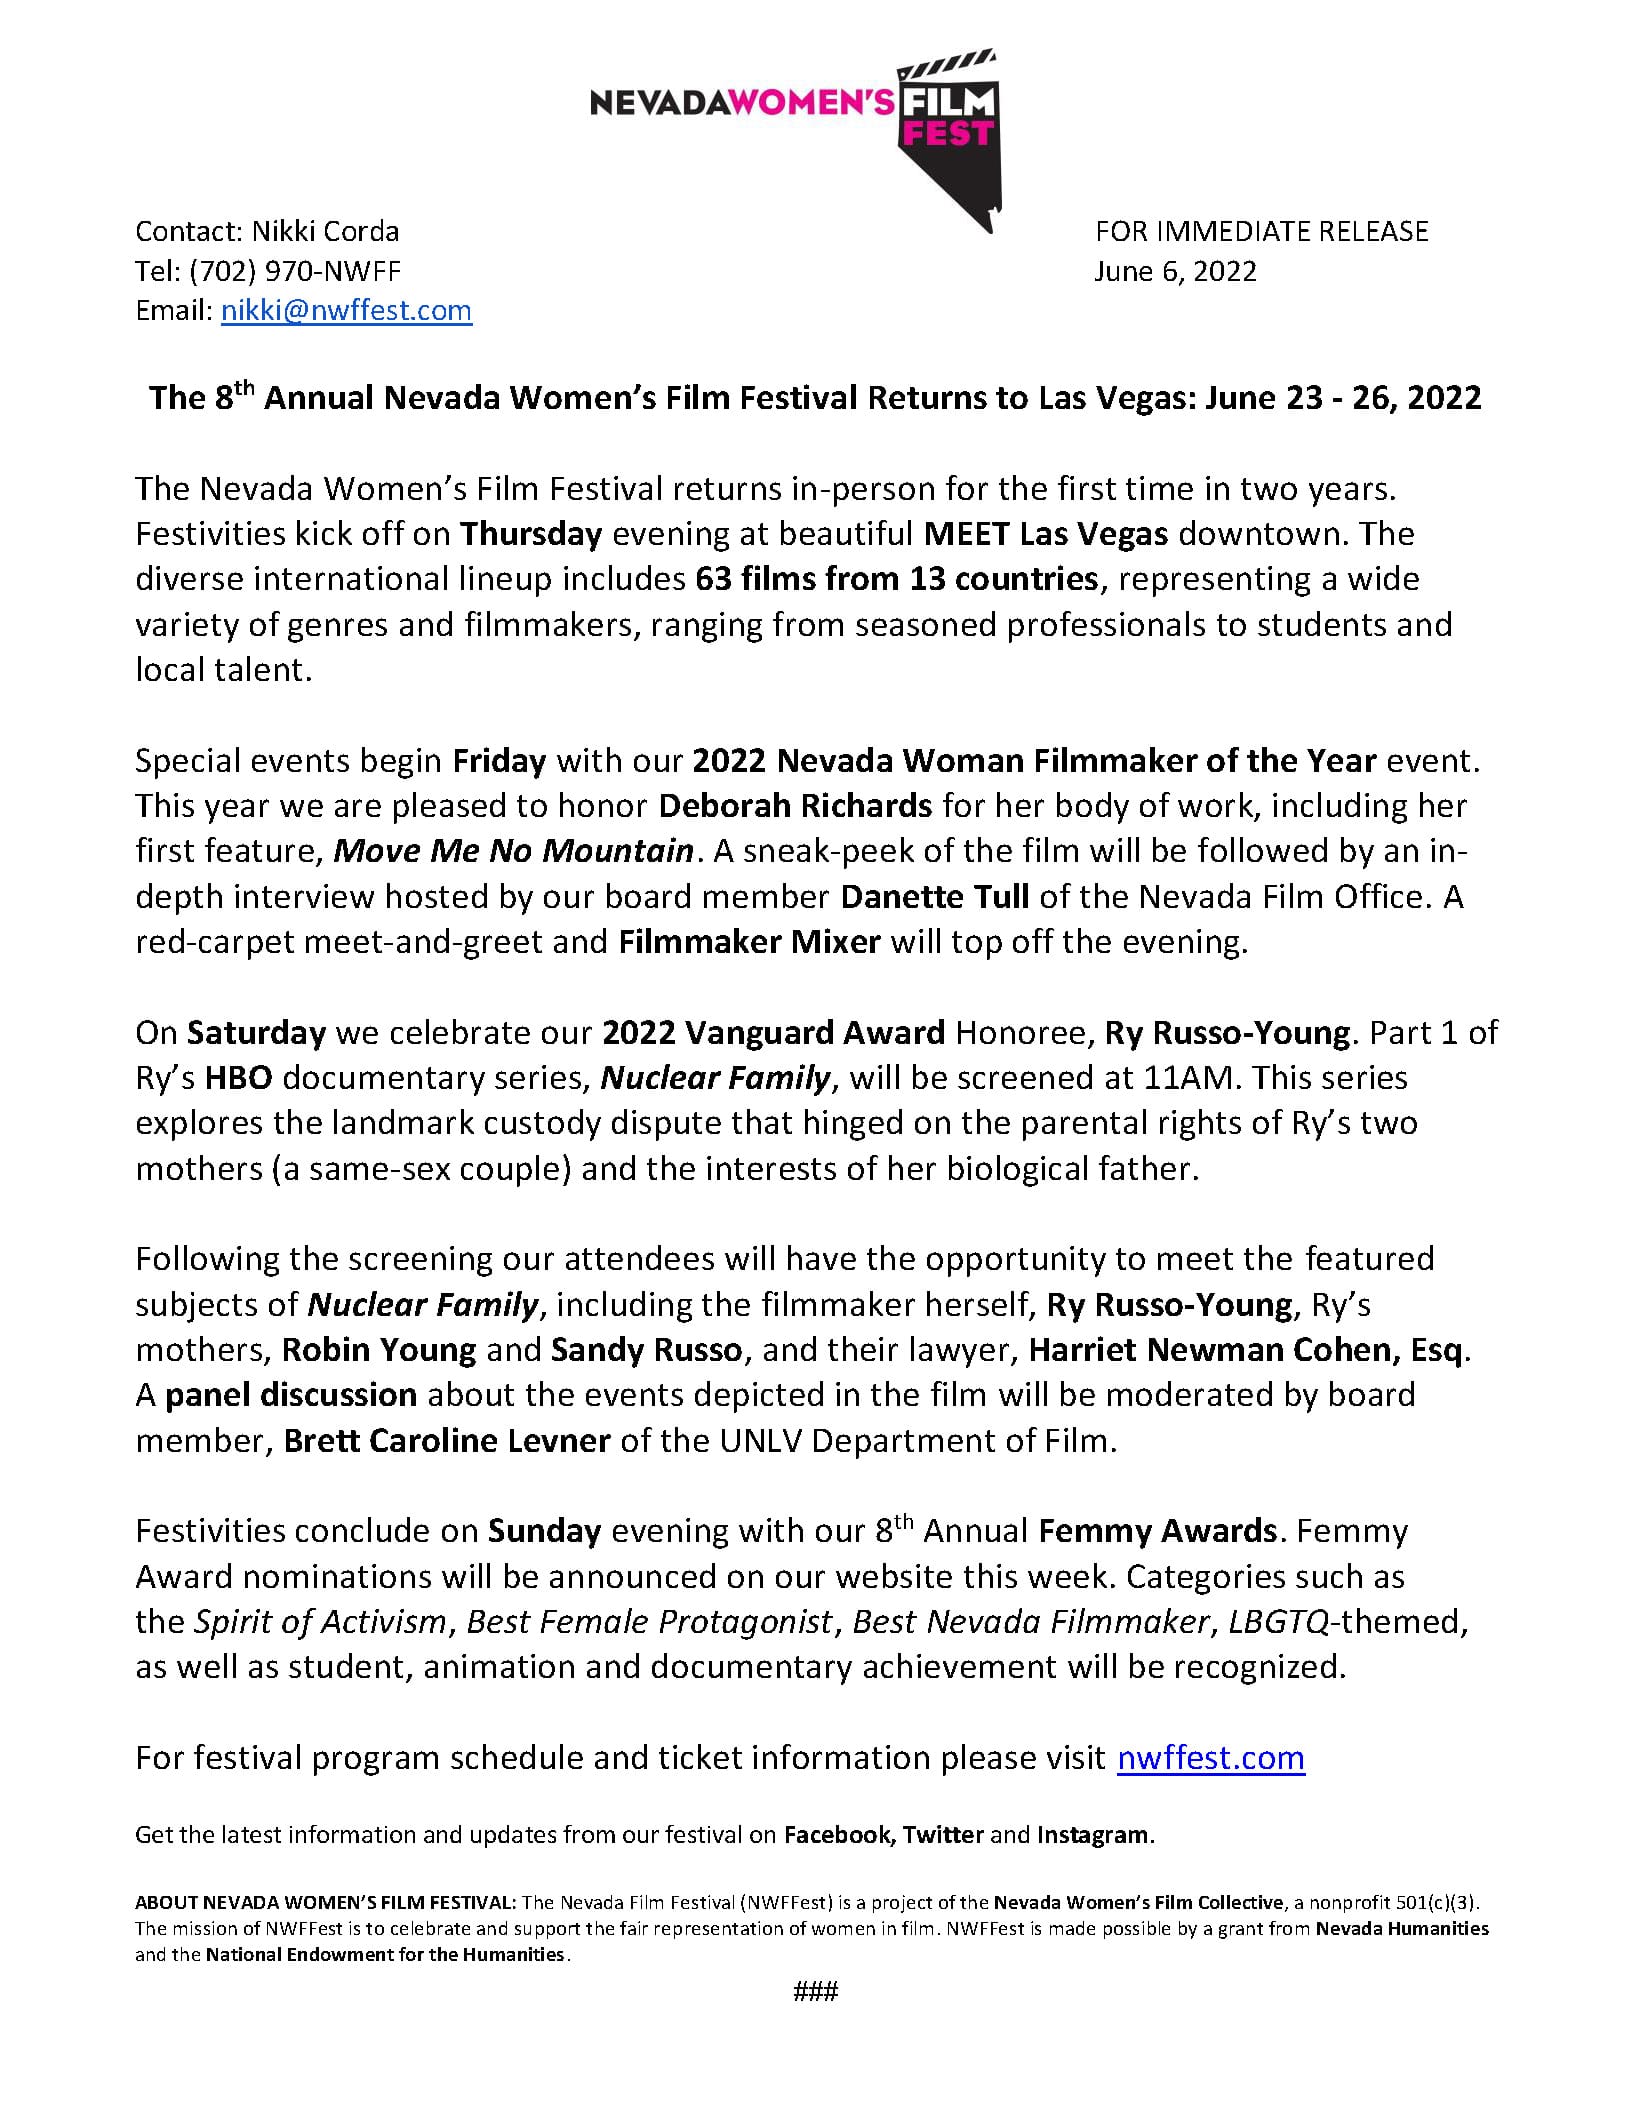 2022 NWFFest Press Release